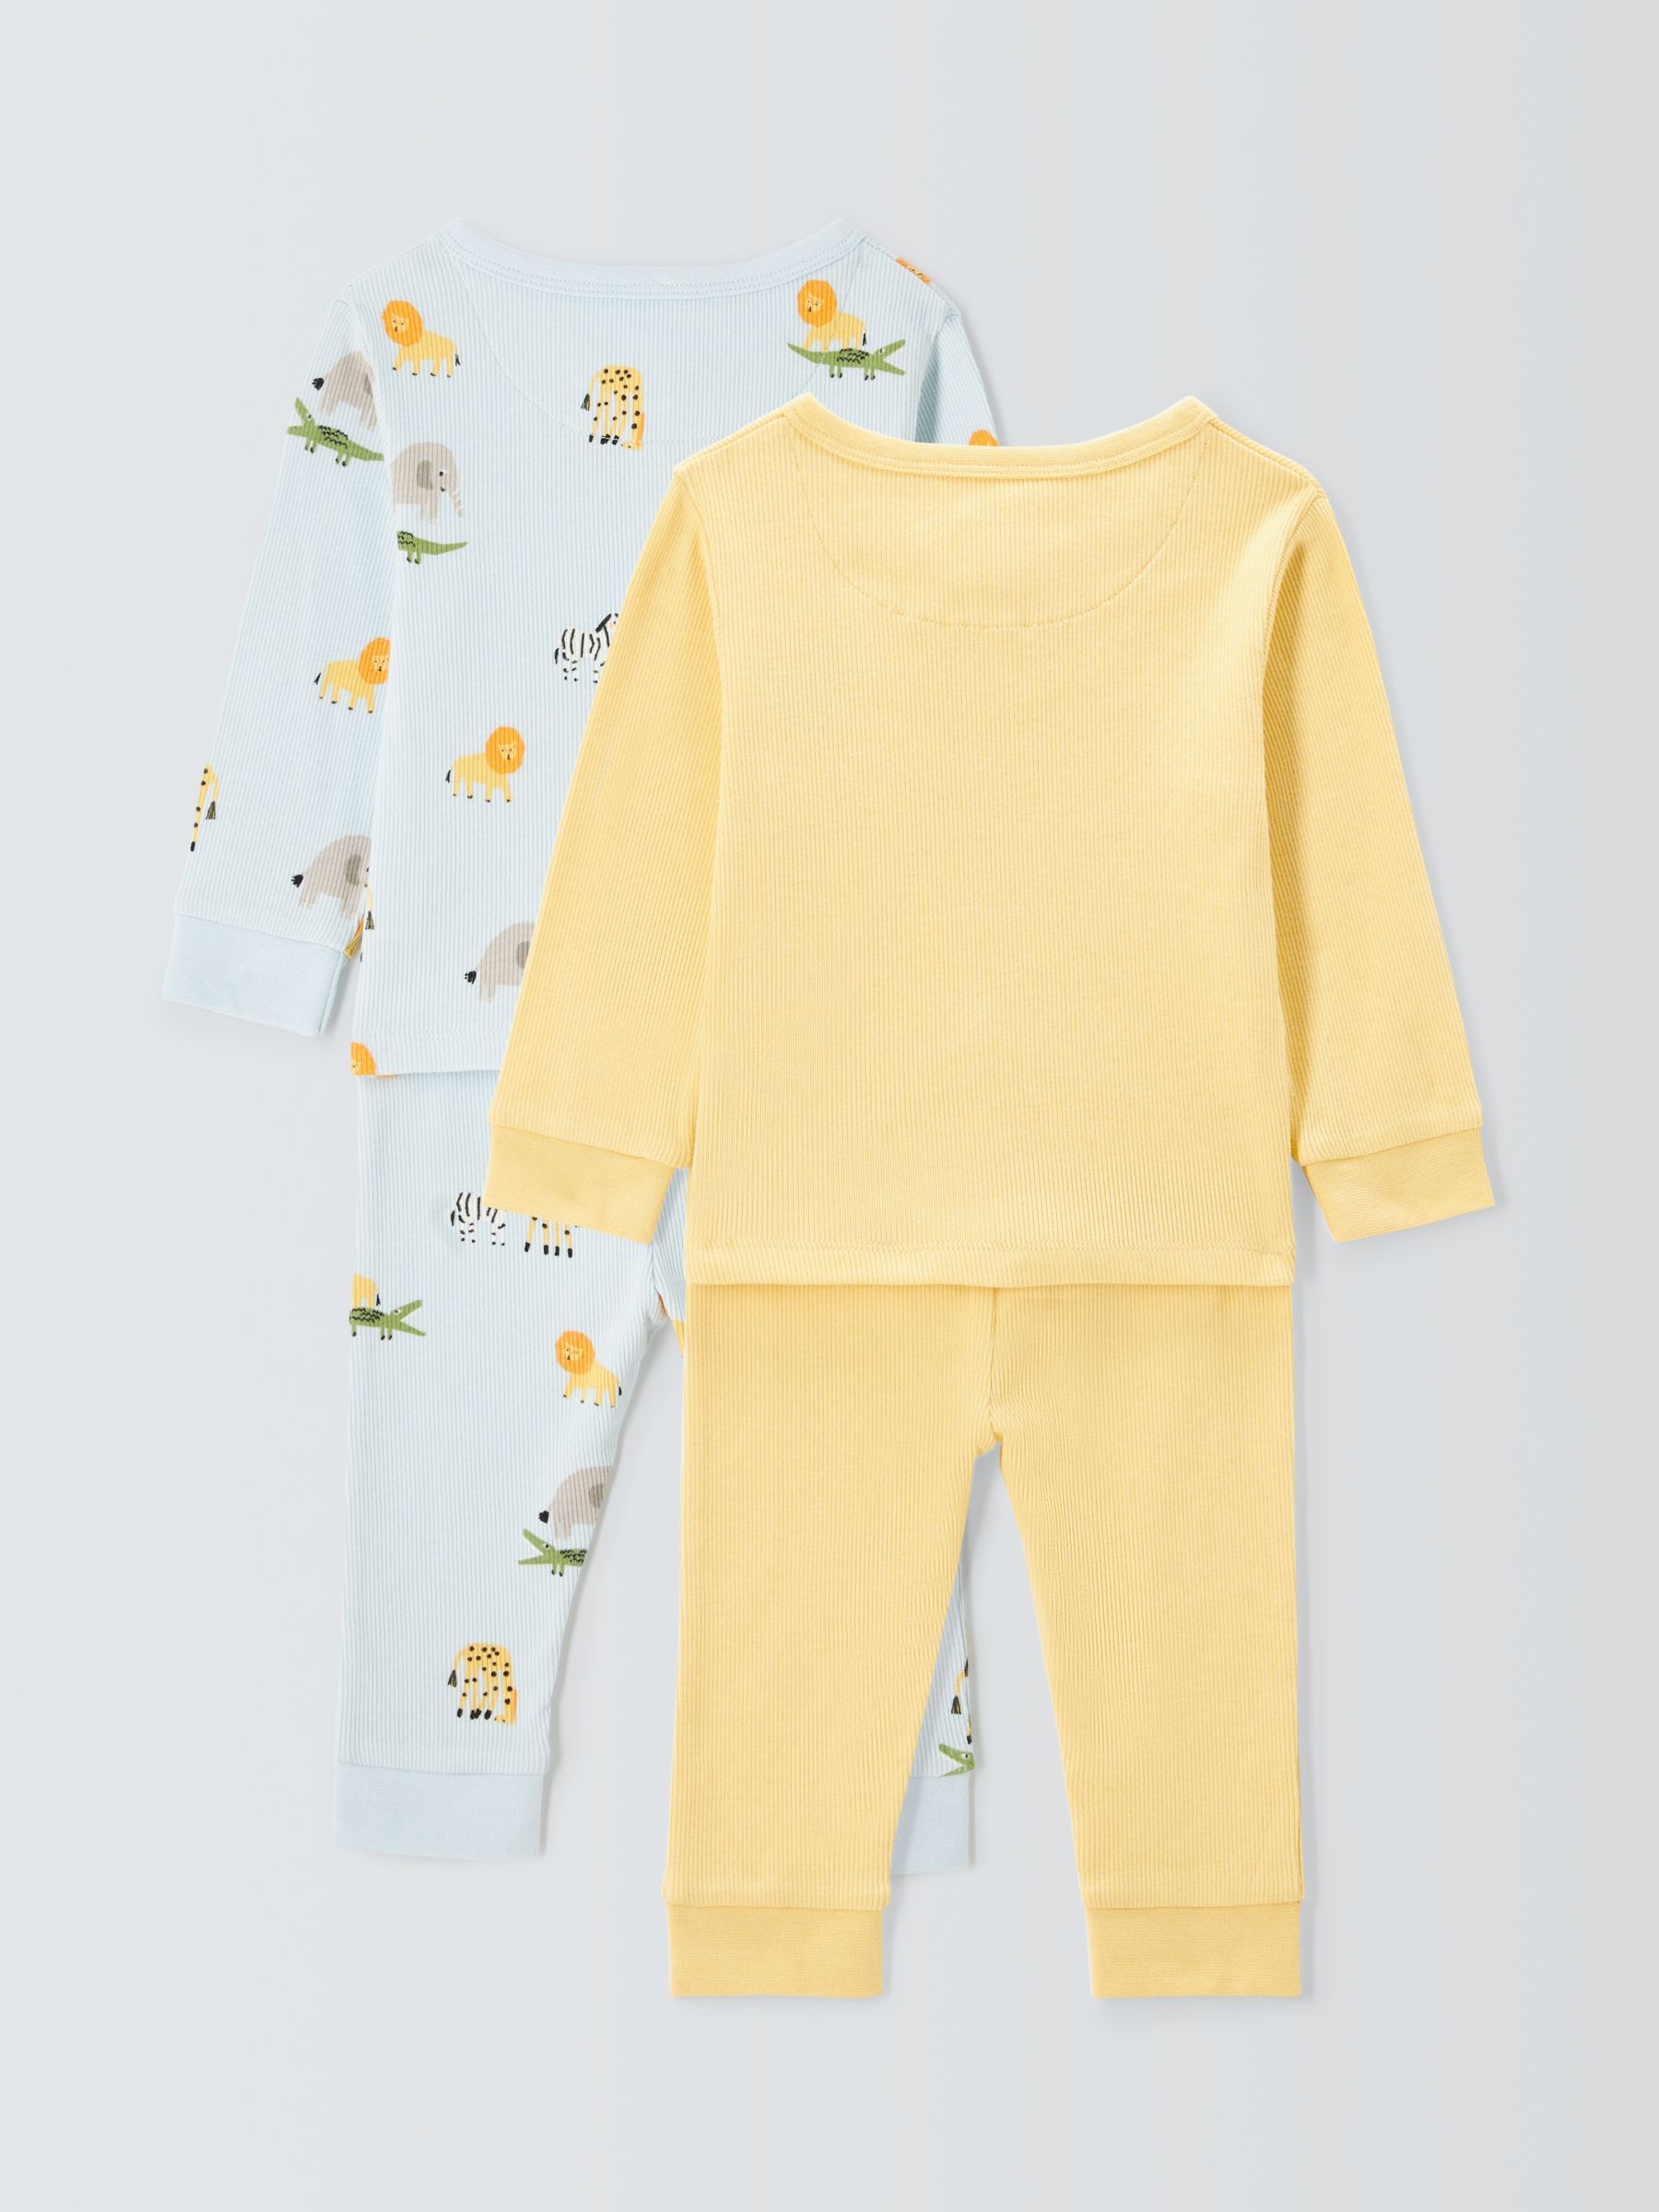 John Lewis Baby Safari Print Pyjamas, Pack of 2, Yellow/Multi, 6-9 months